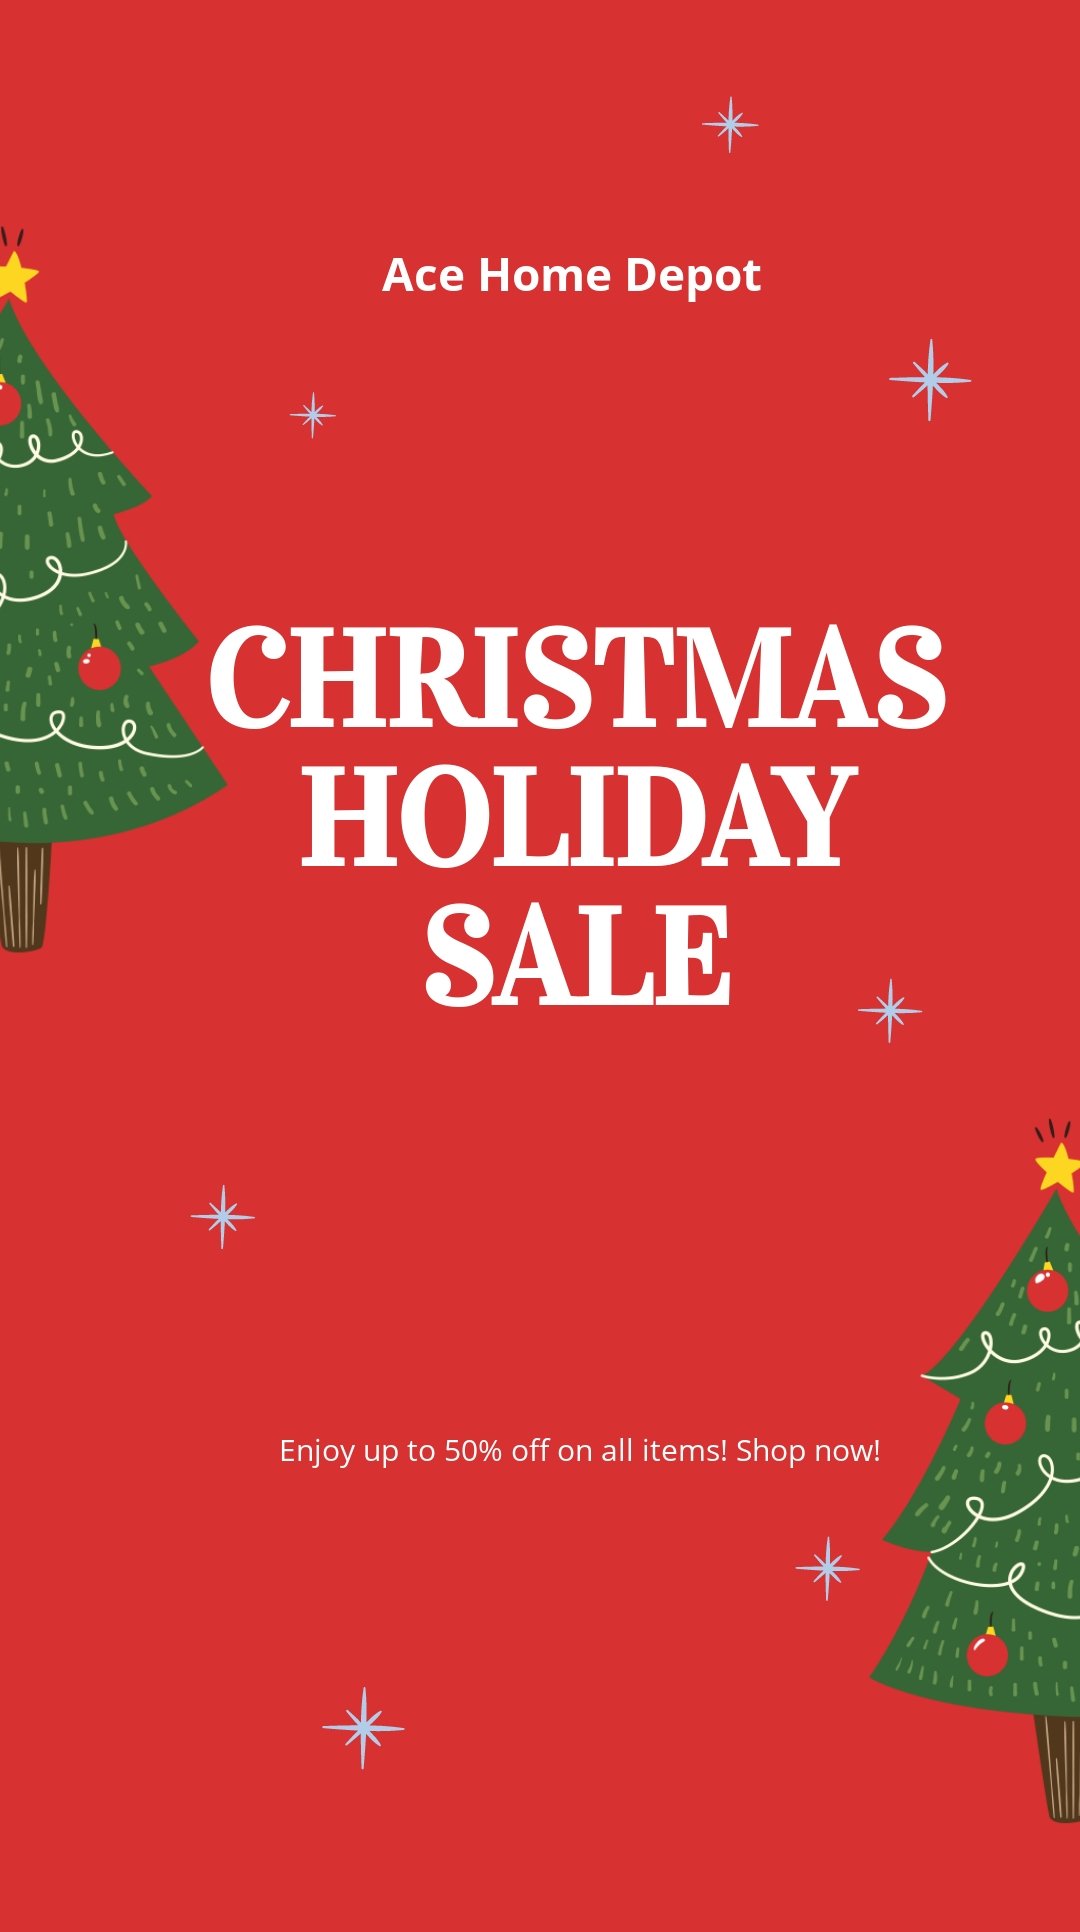 Free Christmas Holiday Sale Whatsapp Image Template.jpe